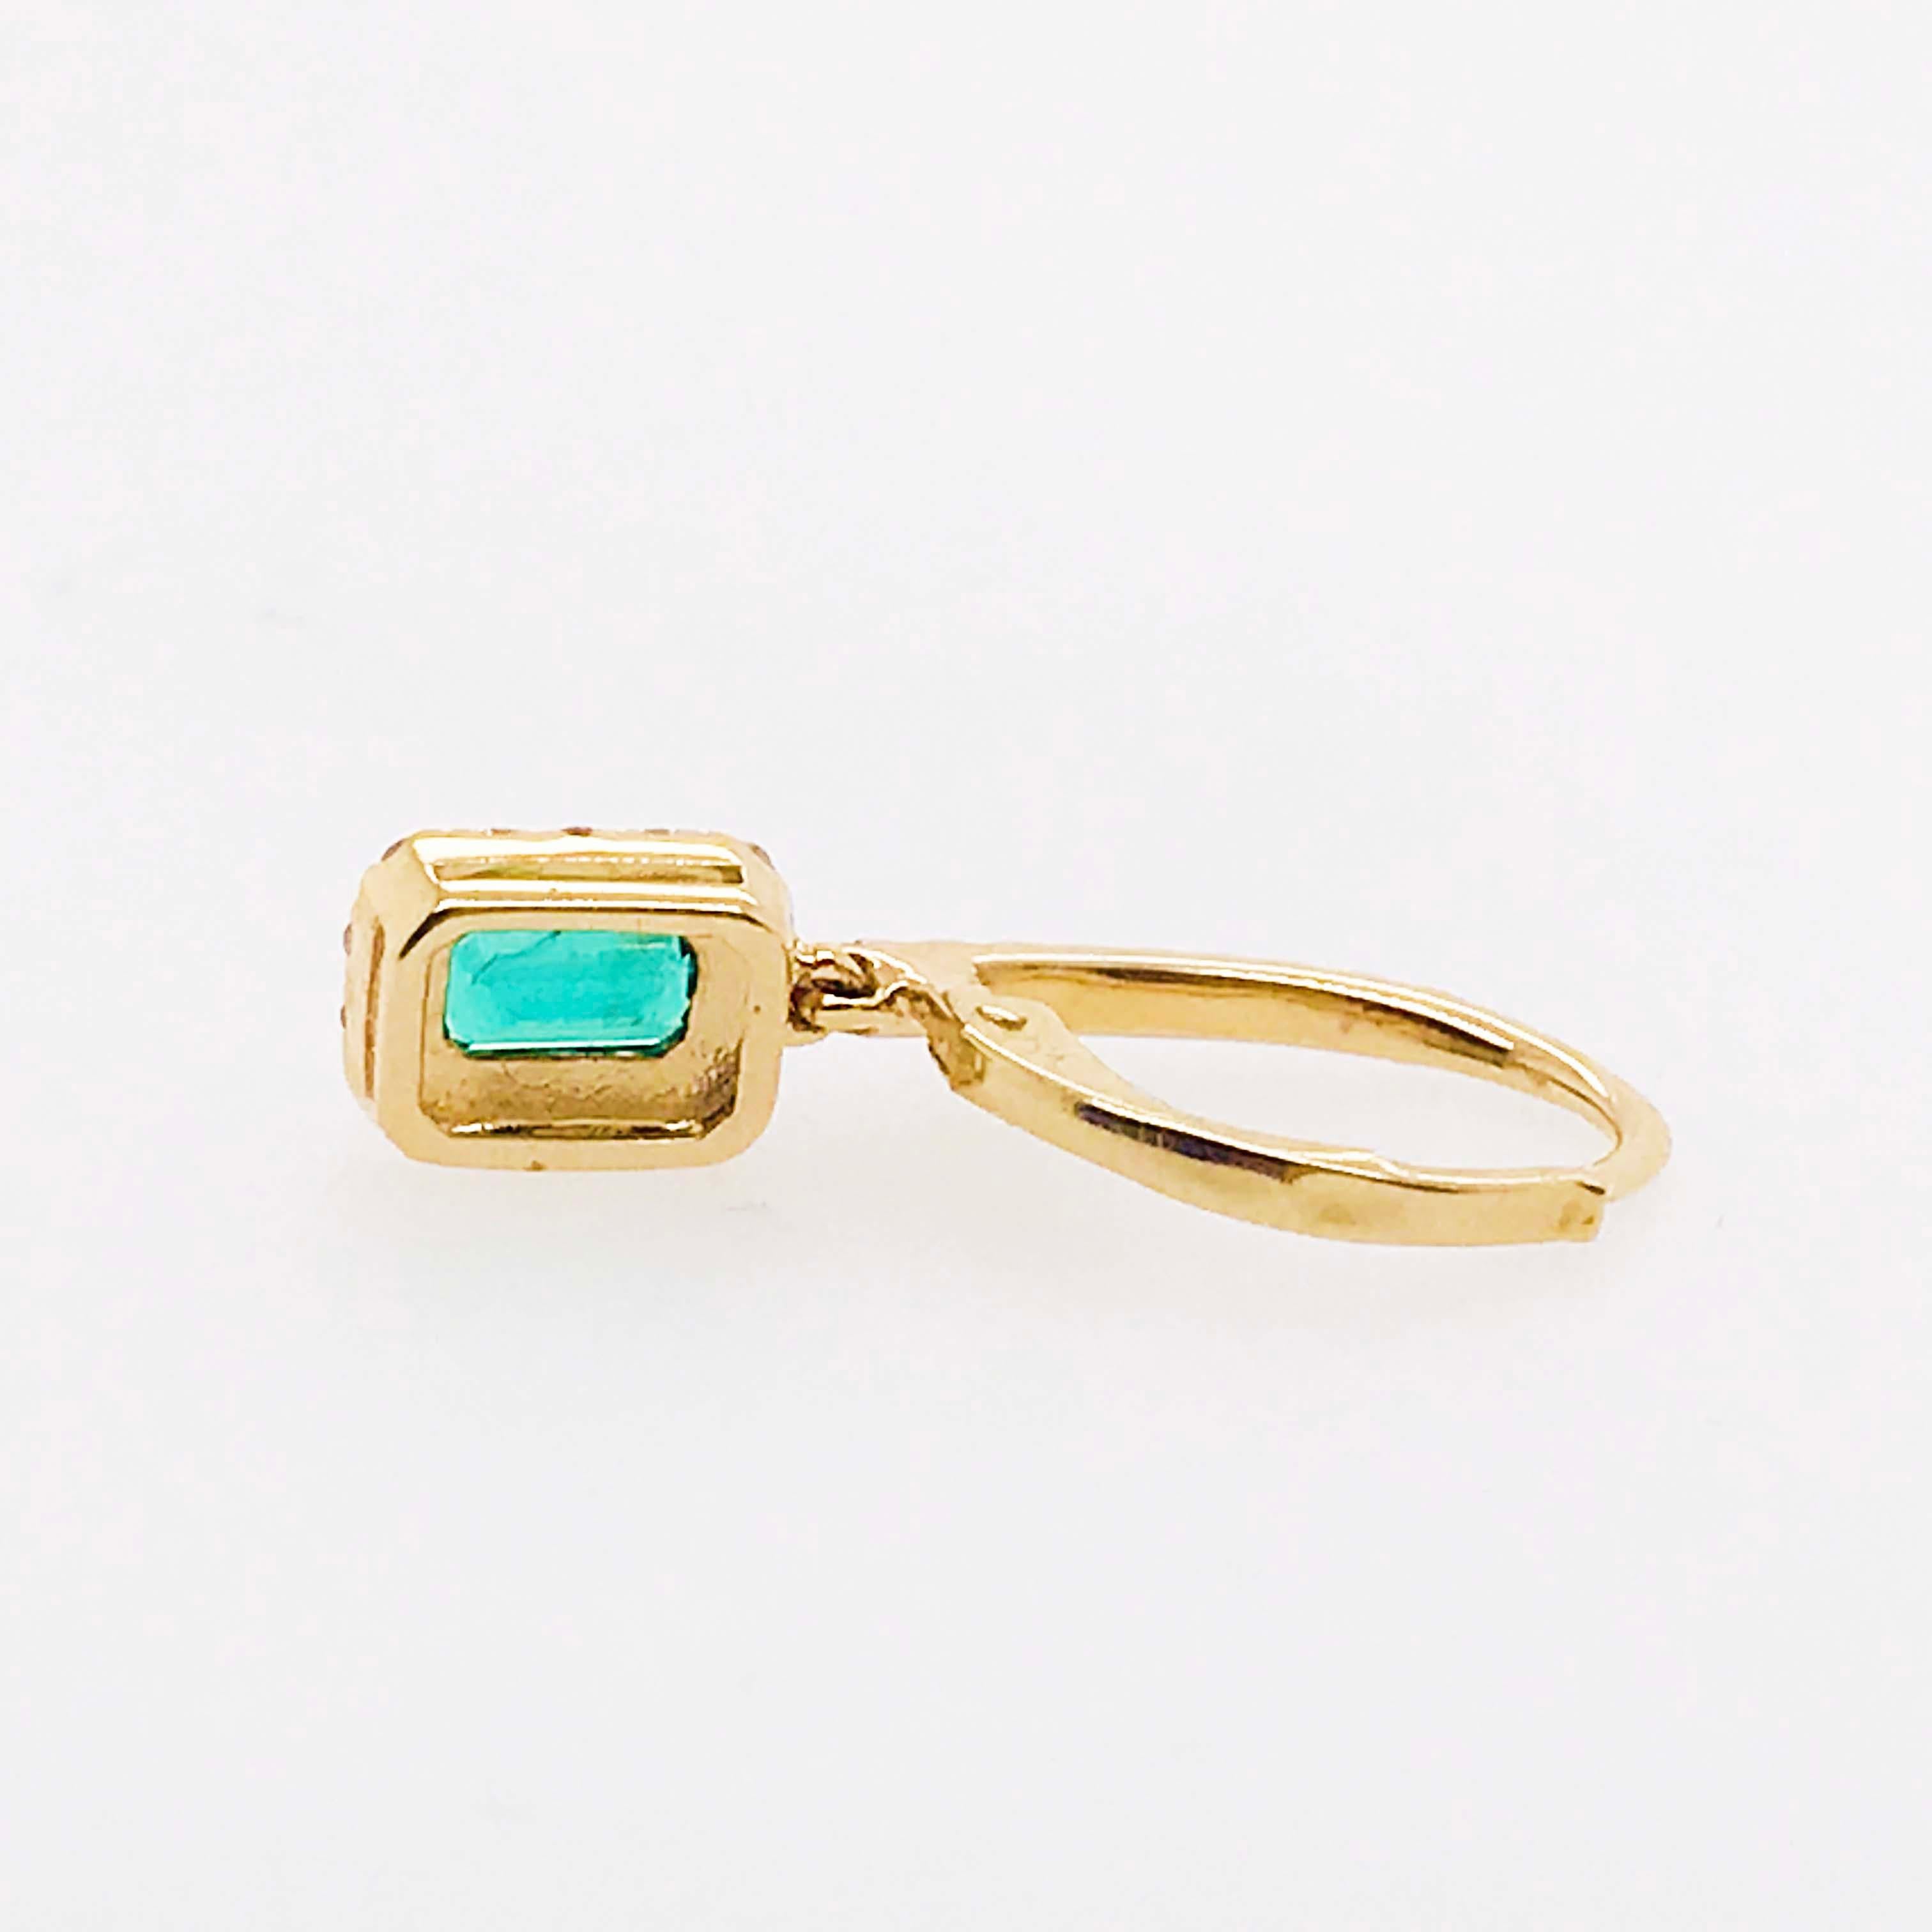 Original Emerald and Diamond Earring Dangles in 14 Karat Yellow Gold 3